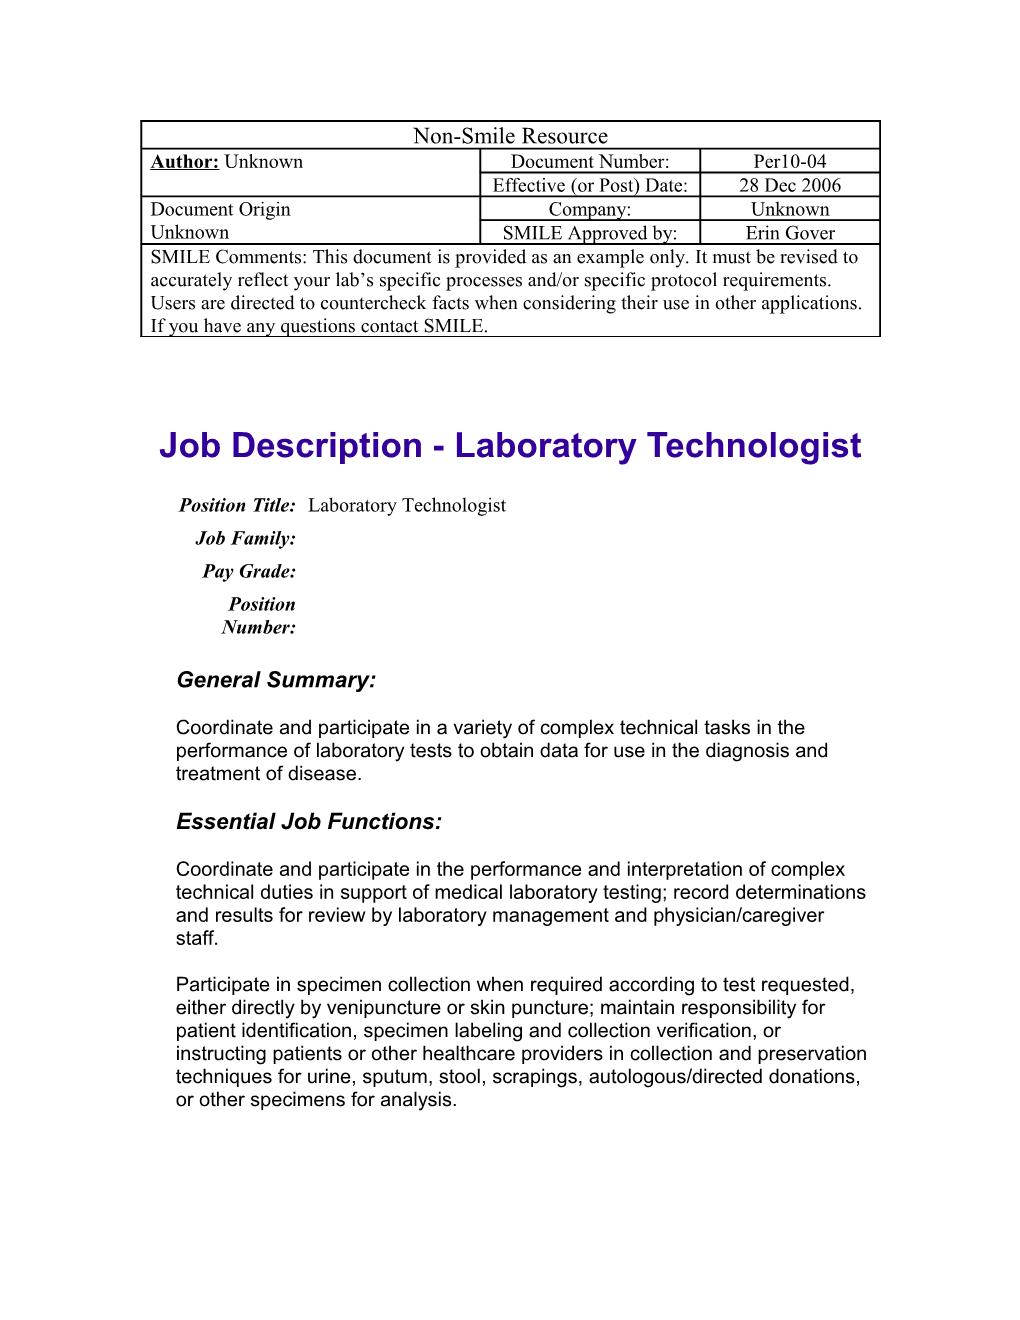 Job Description - Laboratory Technician